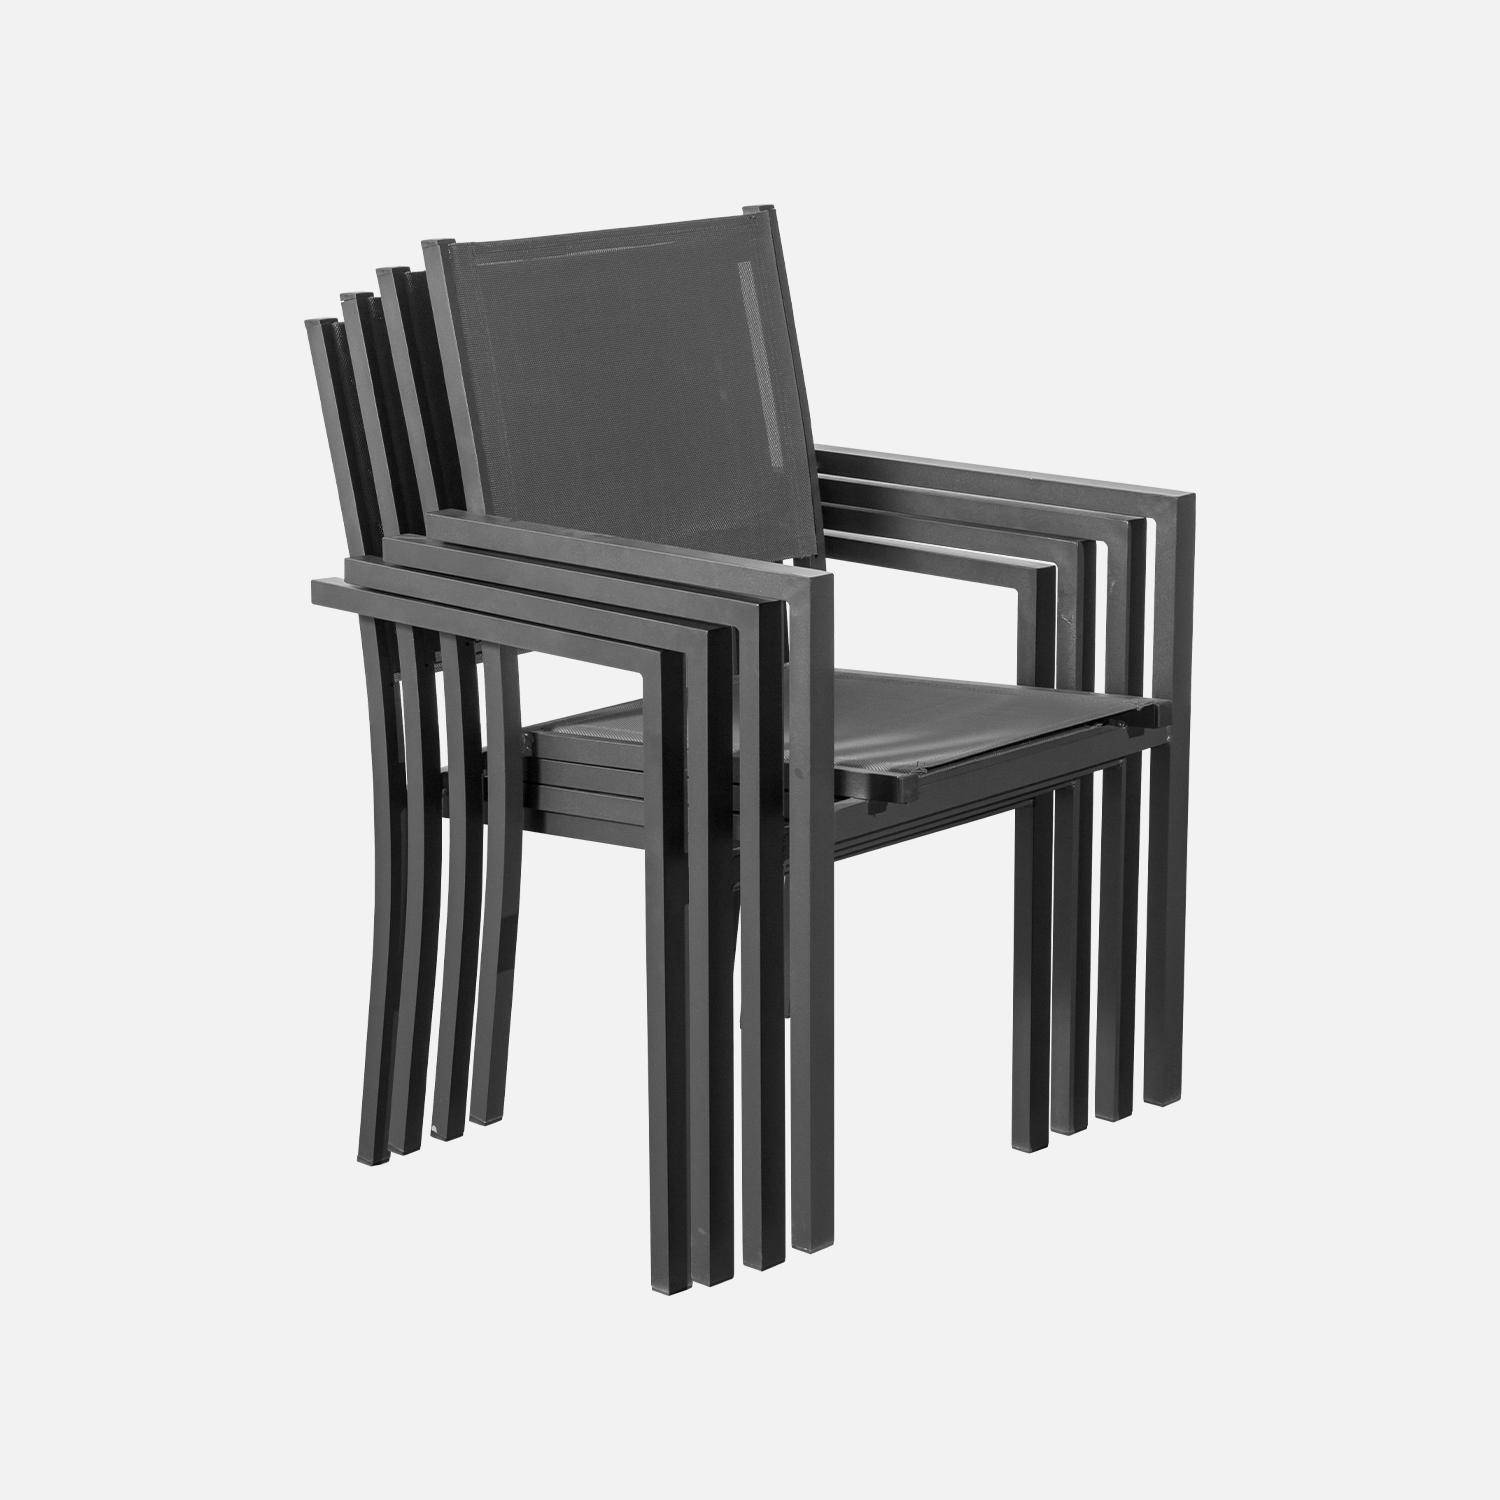 Gartengarnitur aus Aluminium und Textilene - Capua 180 cm - Anthrazit, grau - 8 Plätze - 1 großer rechteckiger Tisch, 8 stapelbare Sessel Photo6